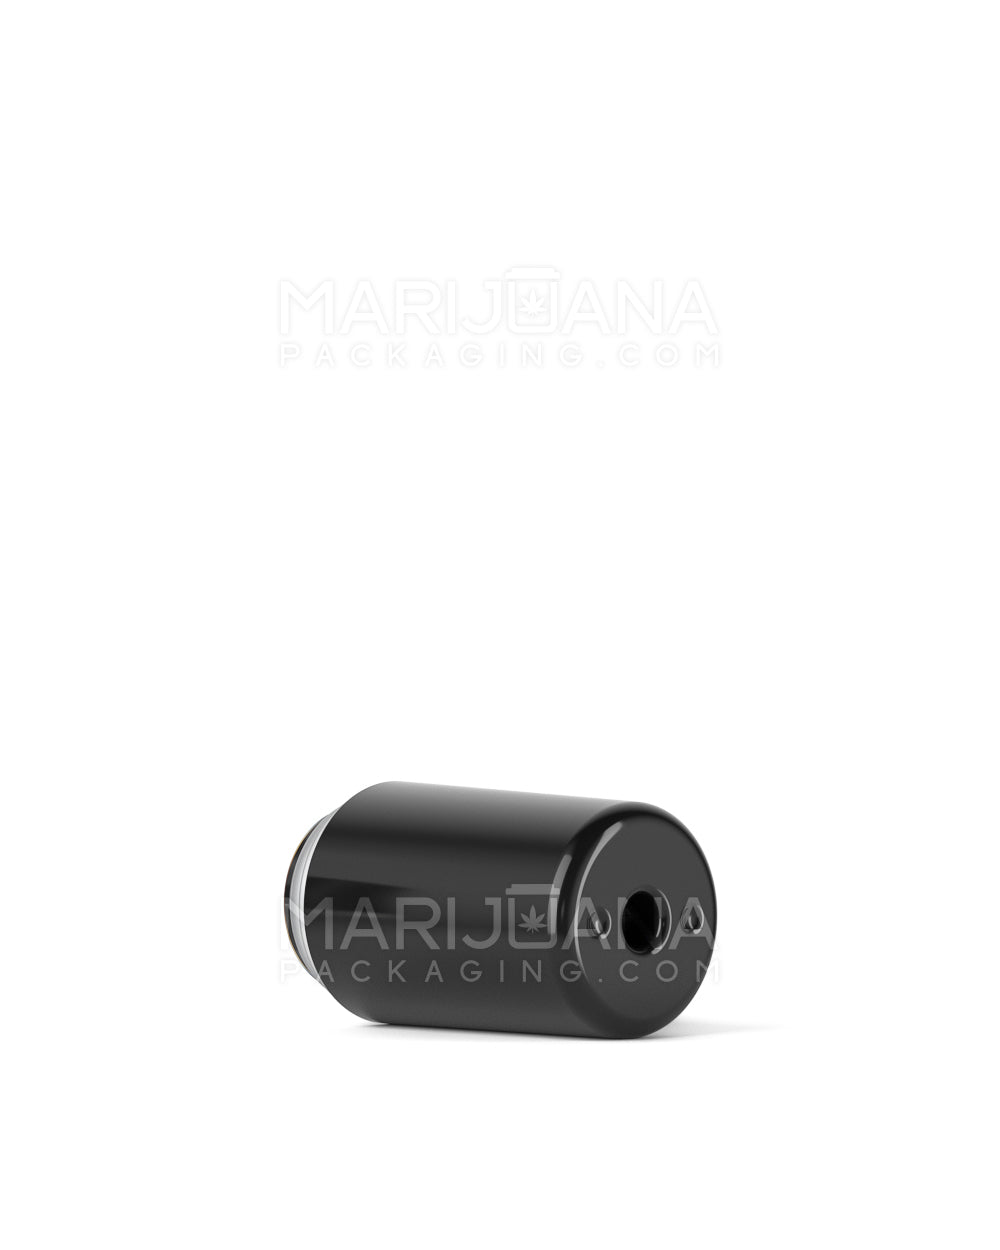 RAE | Round Vape Mouthpiece for Hand Press Plastic Cartridges | Black Plastic - Hand Press - 400 Count - 5